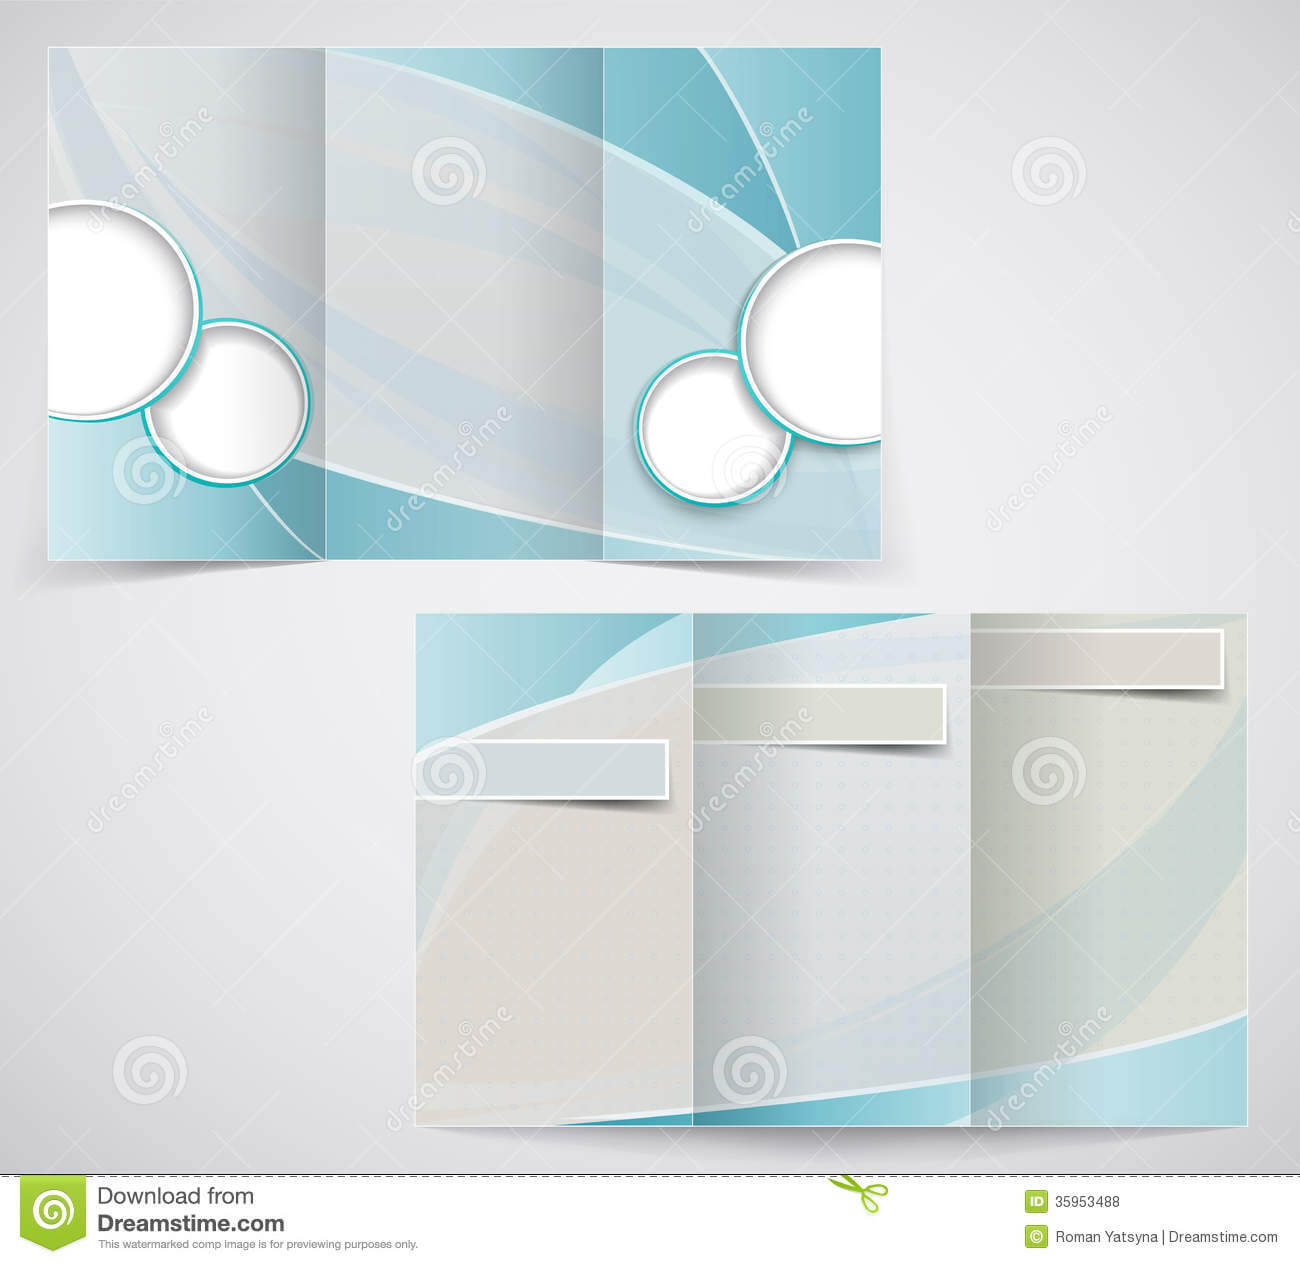 Tri Fold Business Brochure Template, Vector Blue D Stock With 3 Fold Brochure Template Free Download